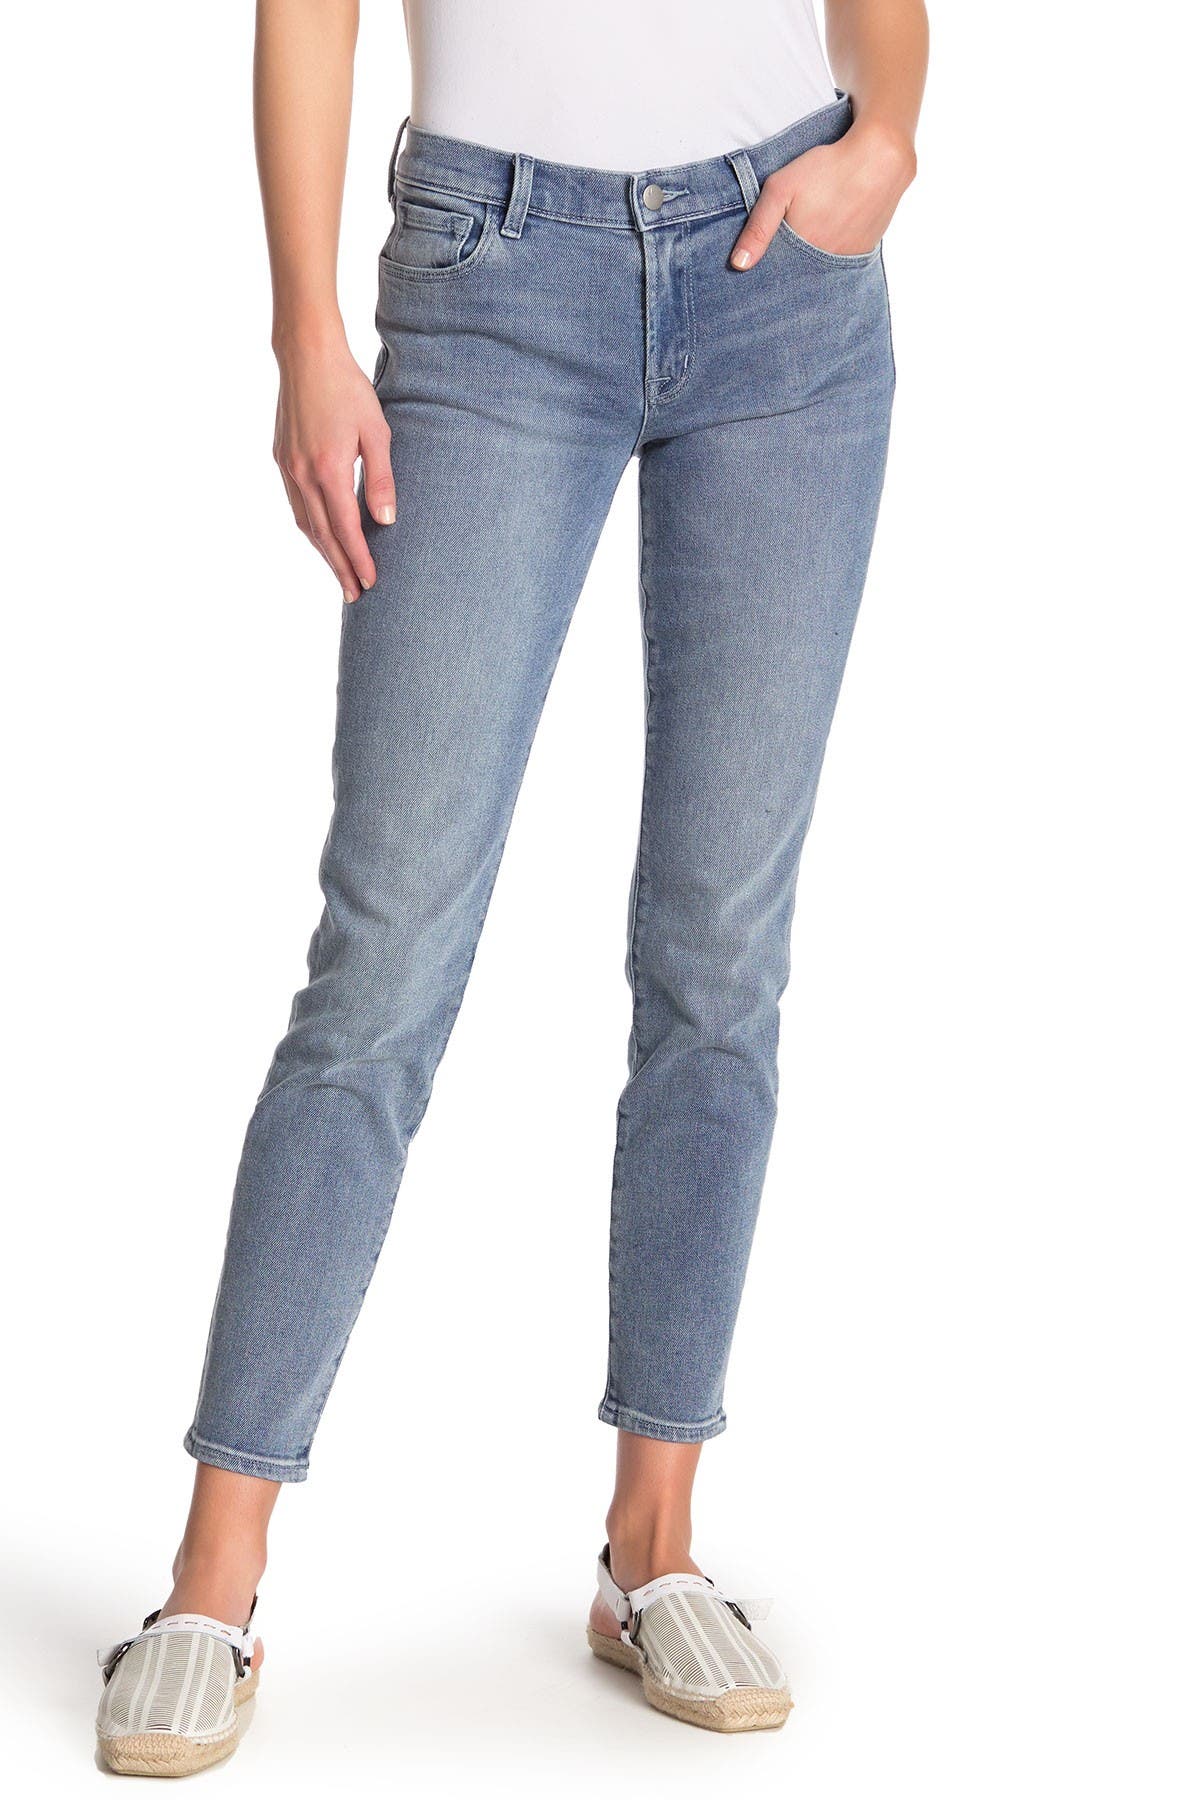 j brand 811 skinny jeans